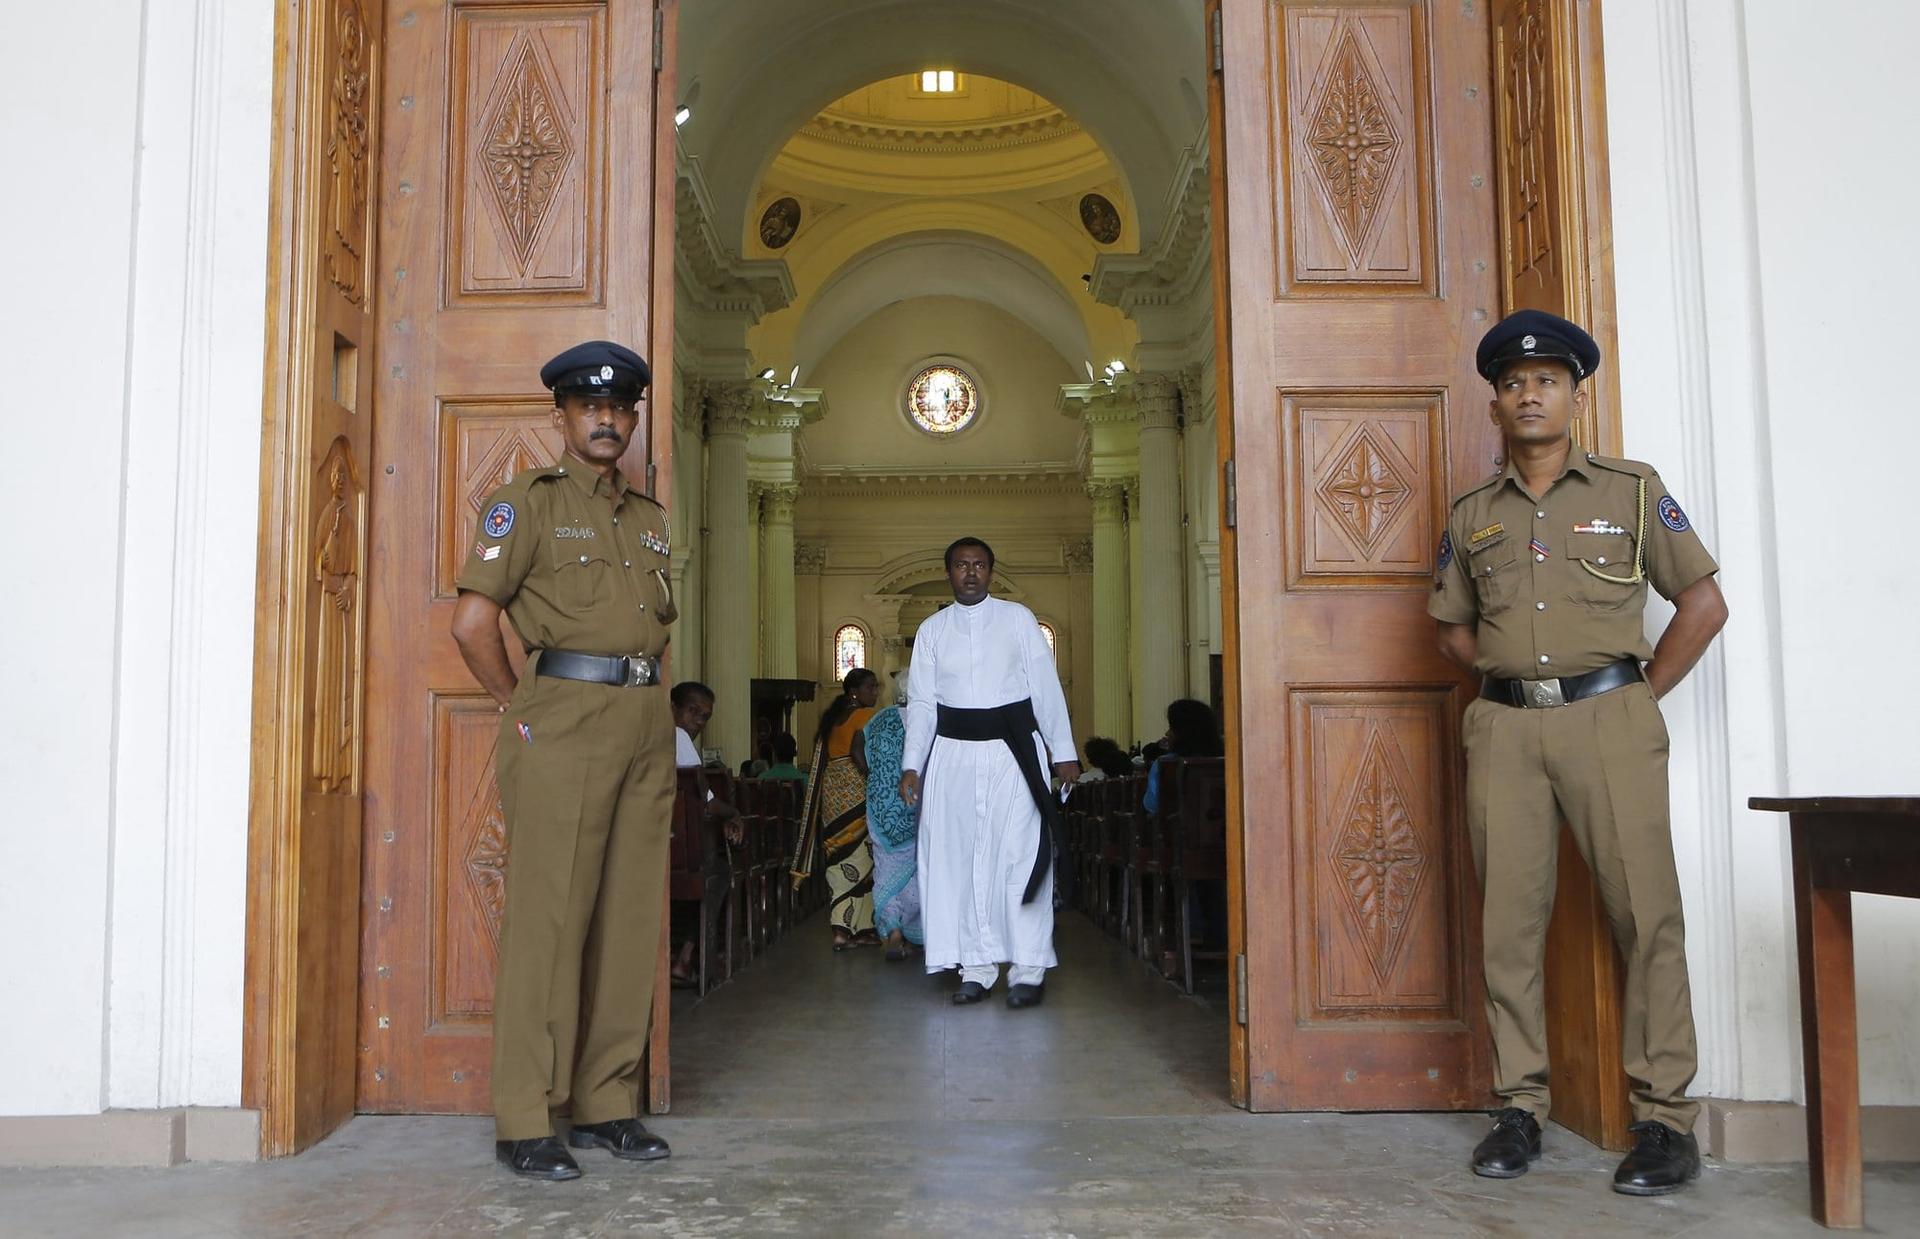 Sri Lanka Catholics hold 1st Sunday Mass since attacks